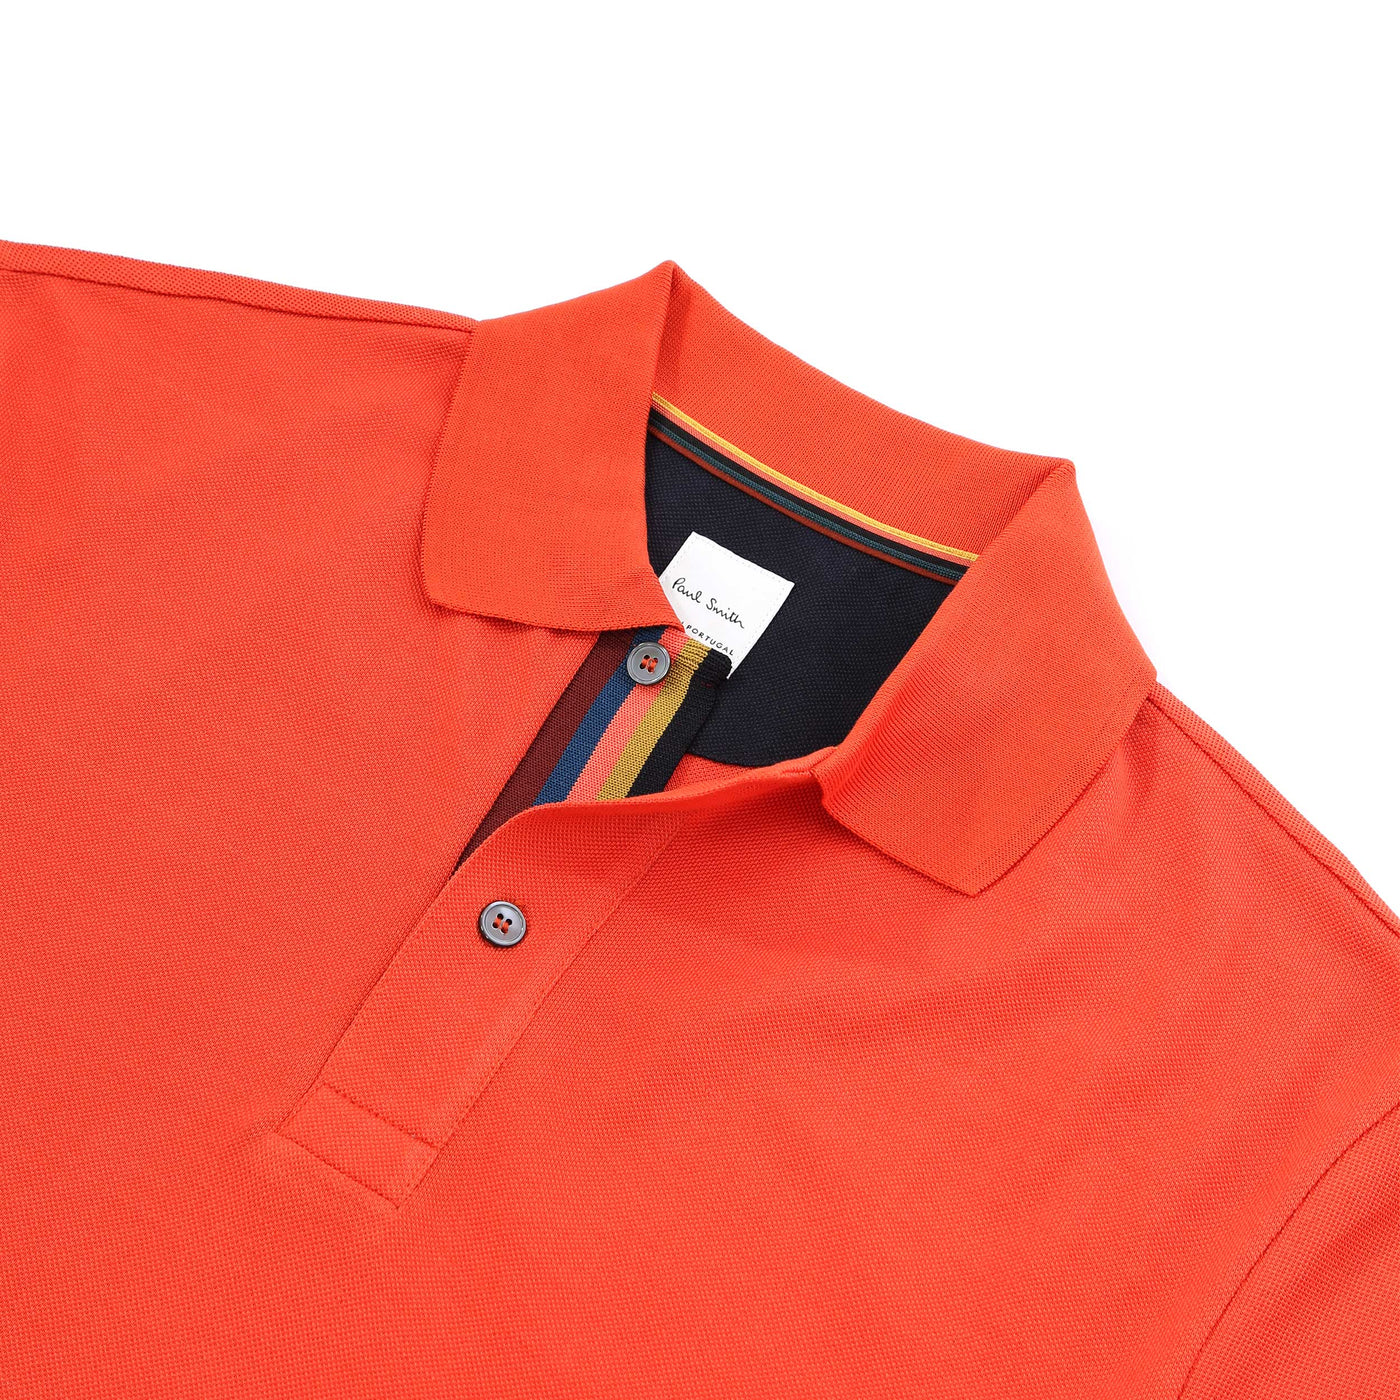 Paul Smith Placket Polo Shirt in Orange Placket